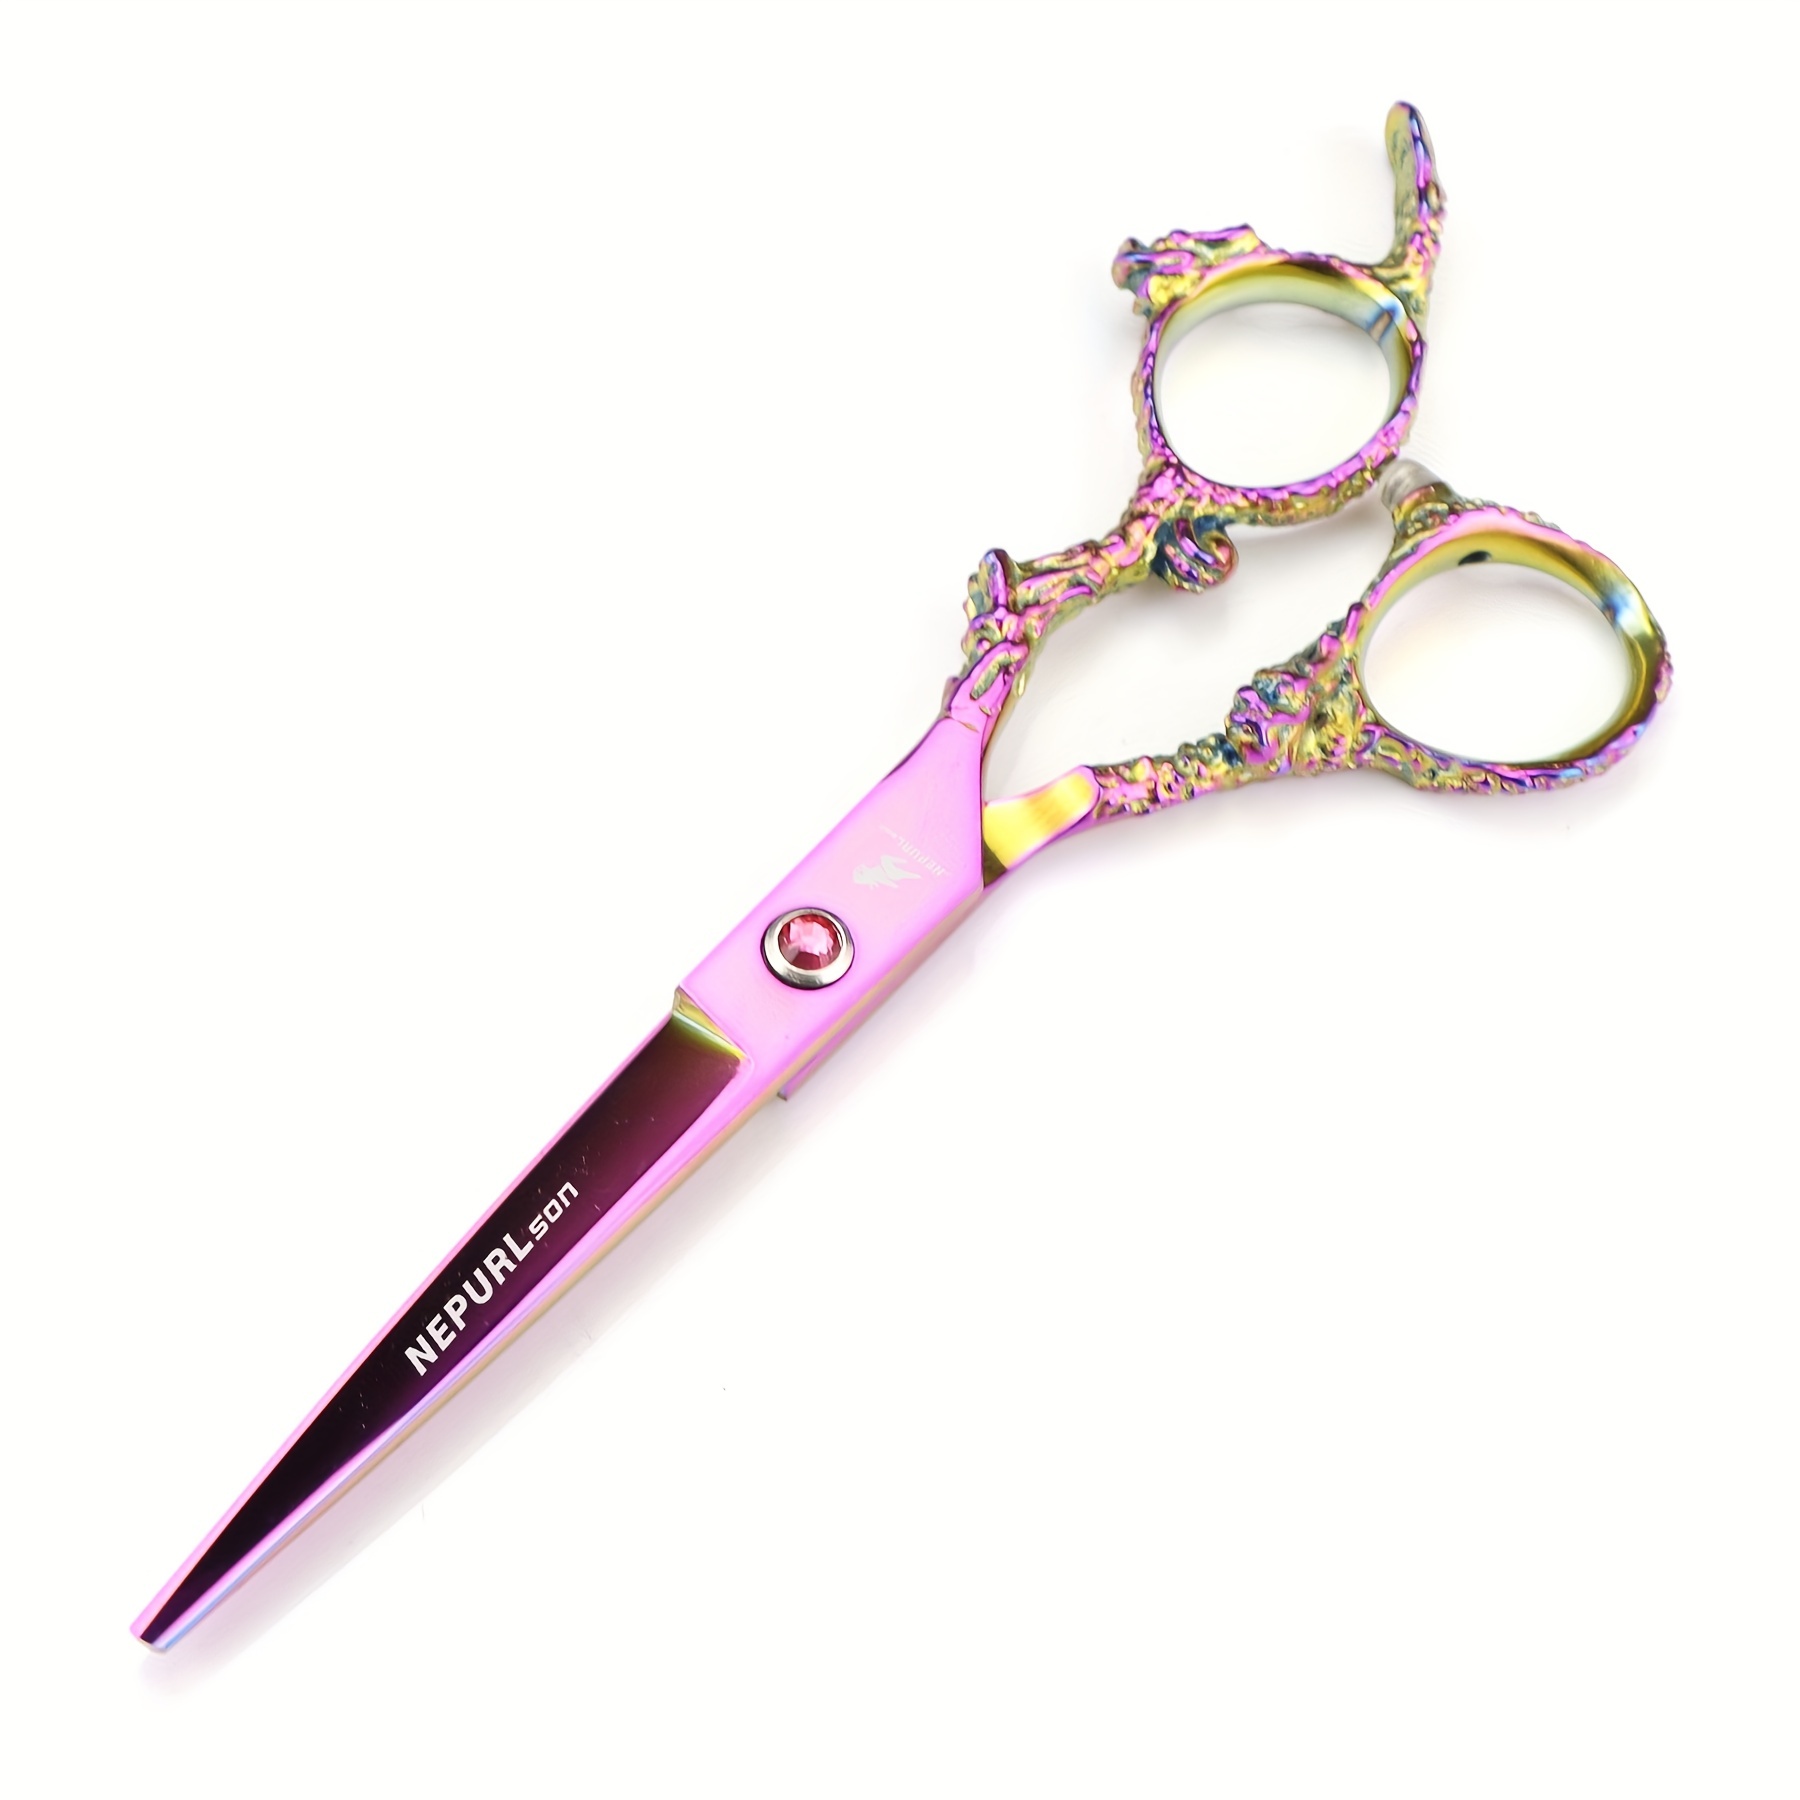 

6.0 Inch Professional Hair Cutting Scissors Light And Sharp Dragon Handle Scissors For Women Men